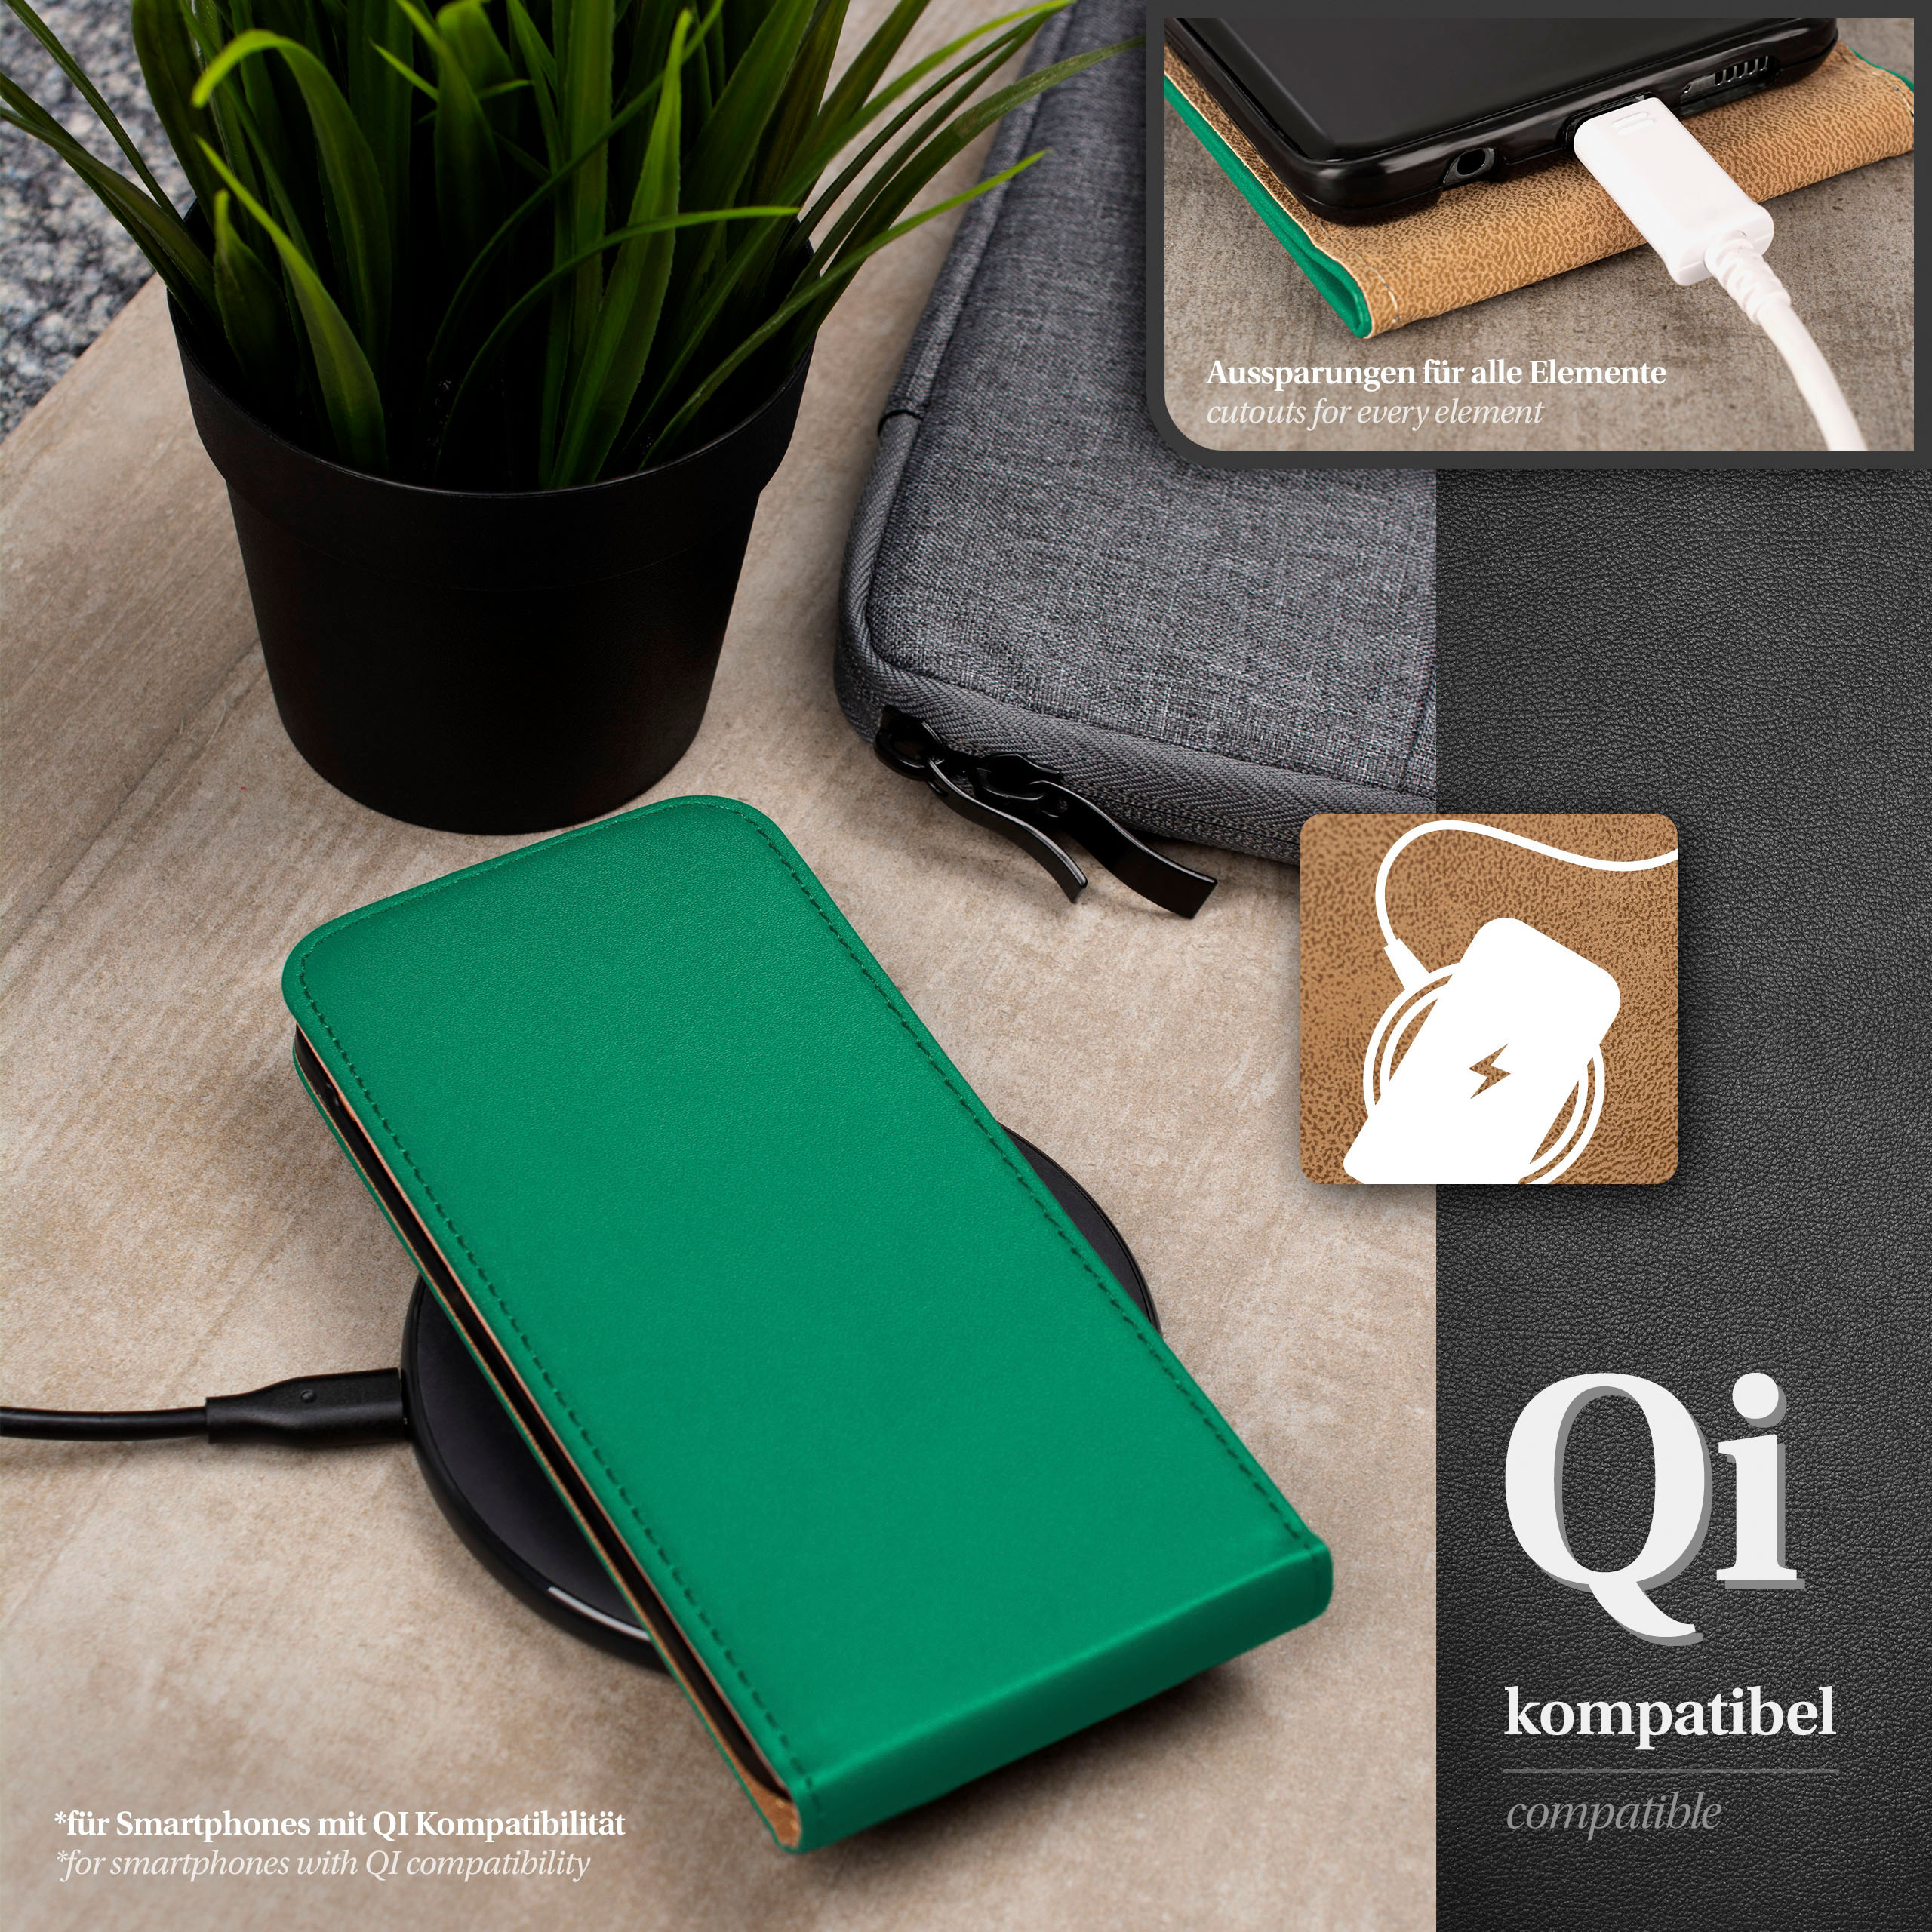 MOEX Flip Case, Flip Cover, SE Emerald-Green 5s (2016), iPhone / / 5 Apple